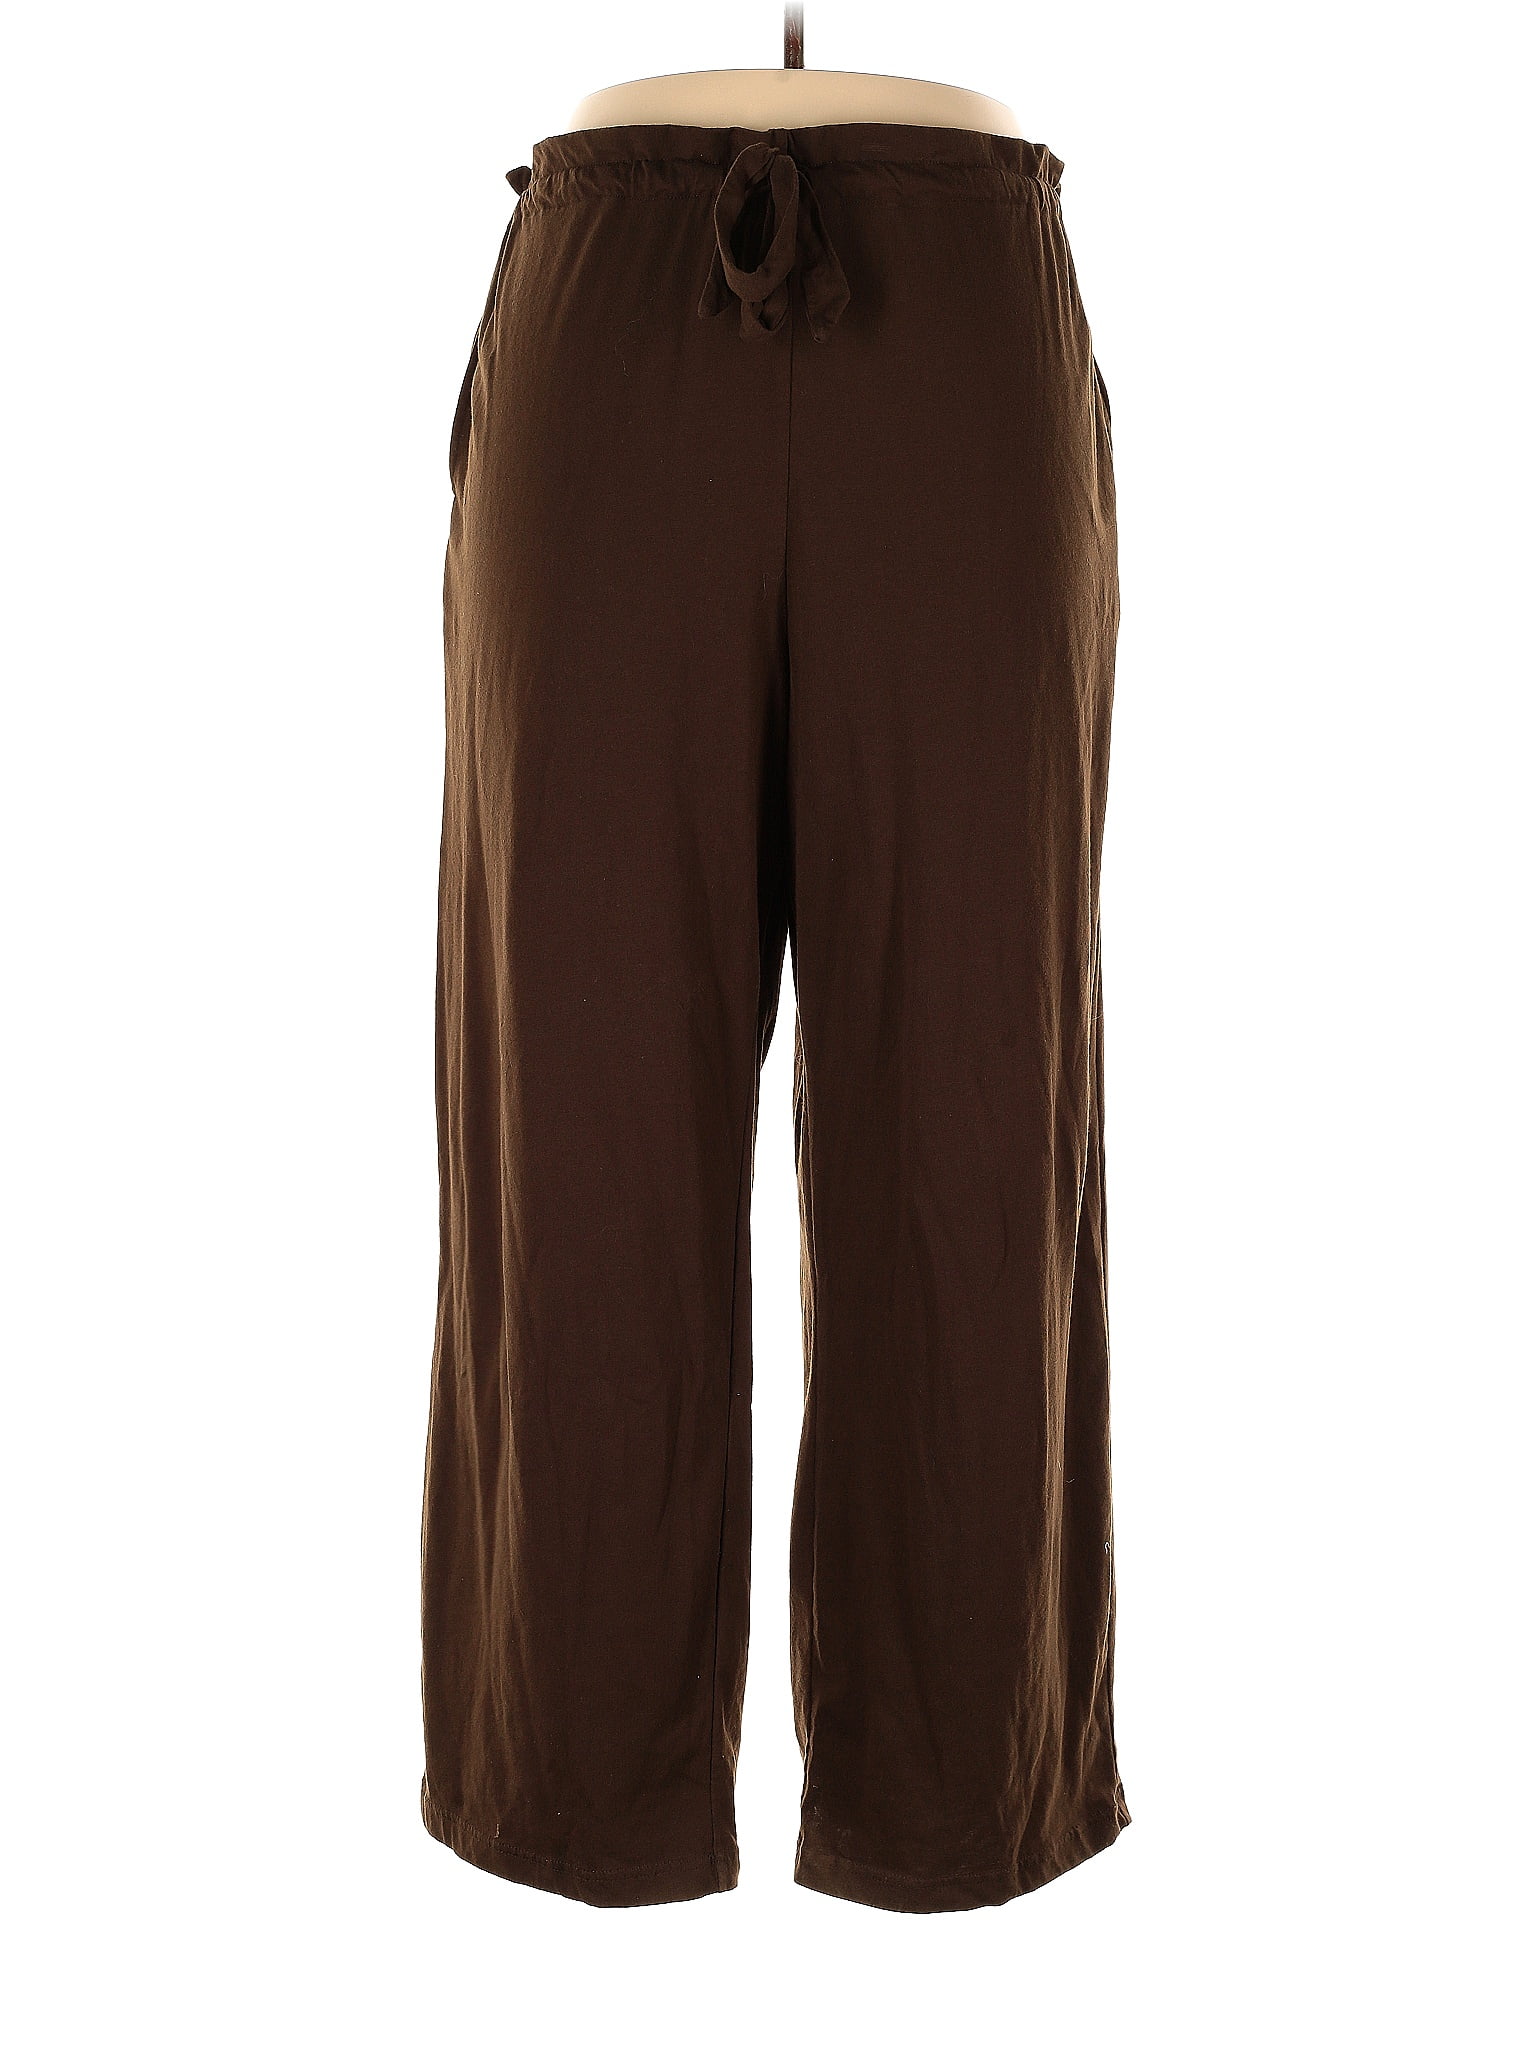 TONLÉ Solid Brown Casual Pants Size XL - 72% off | thredUP